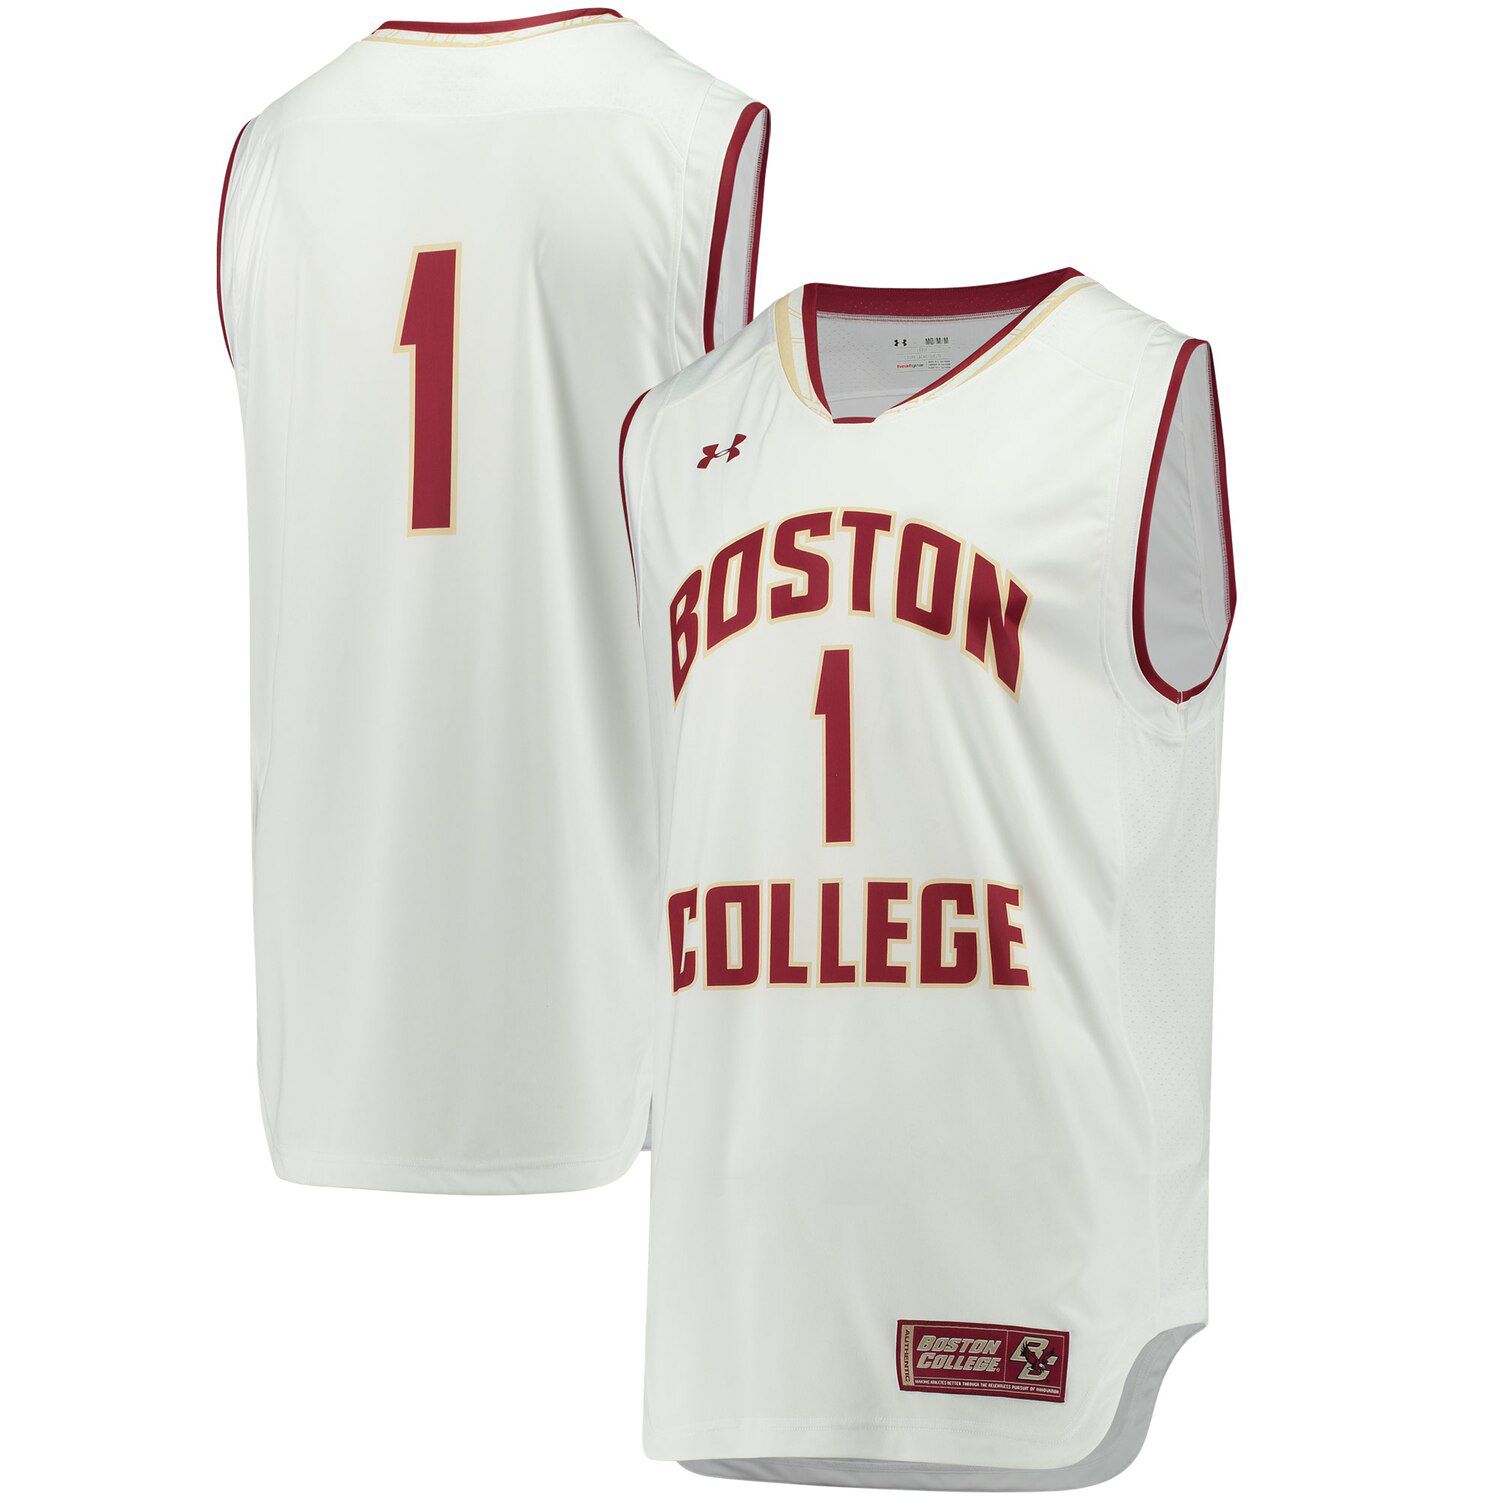 boston college basketball jersey